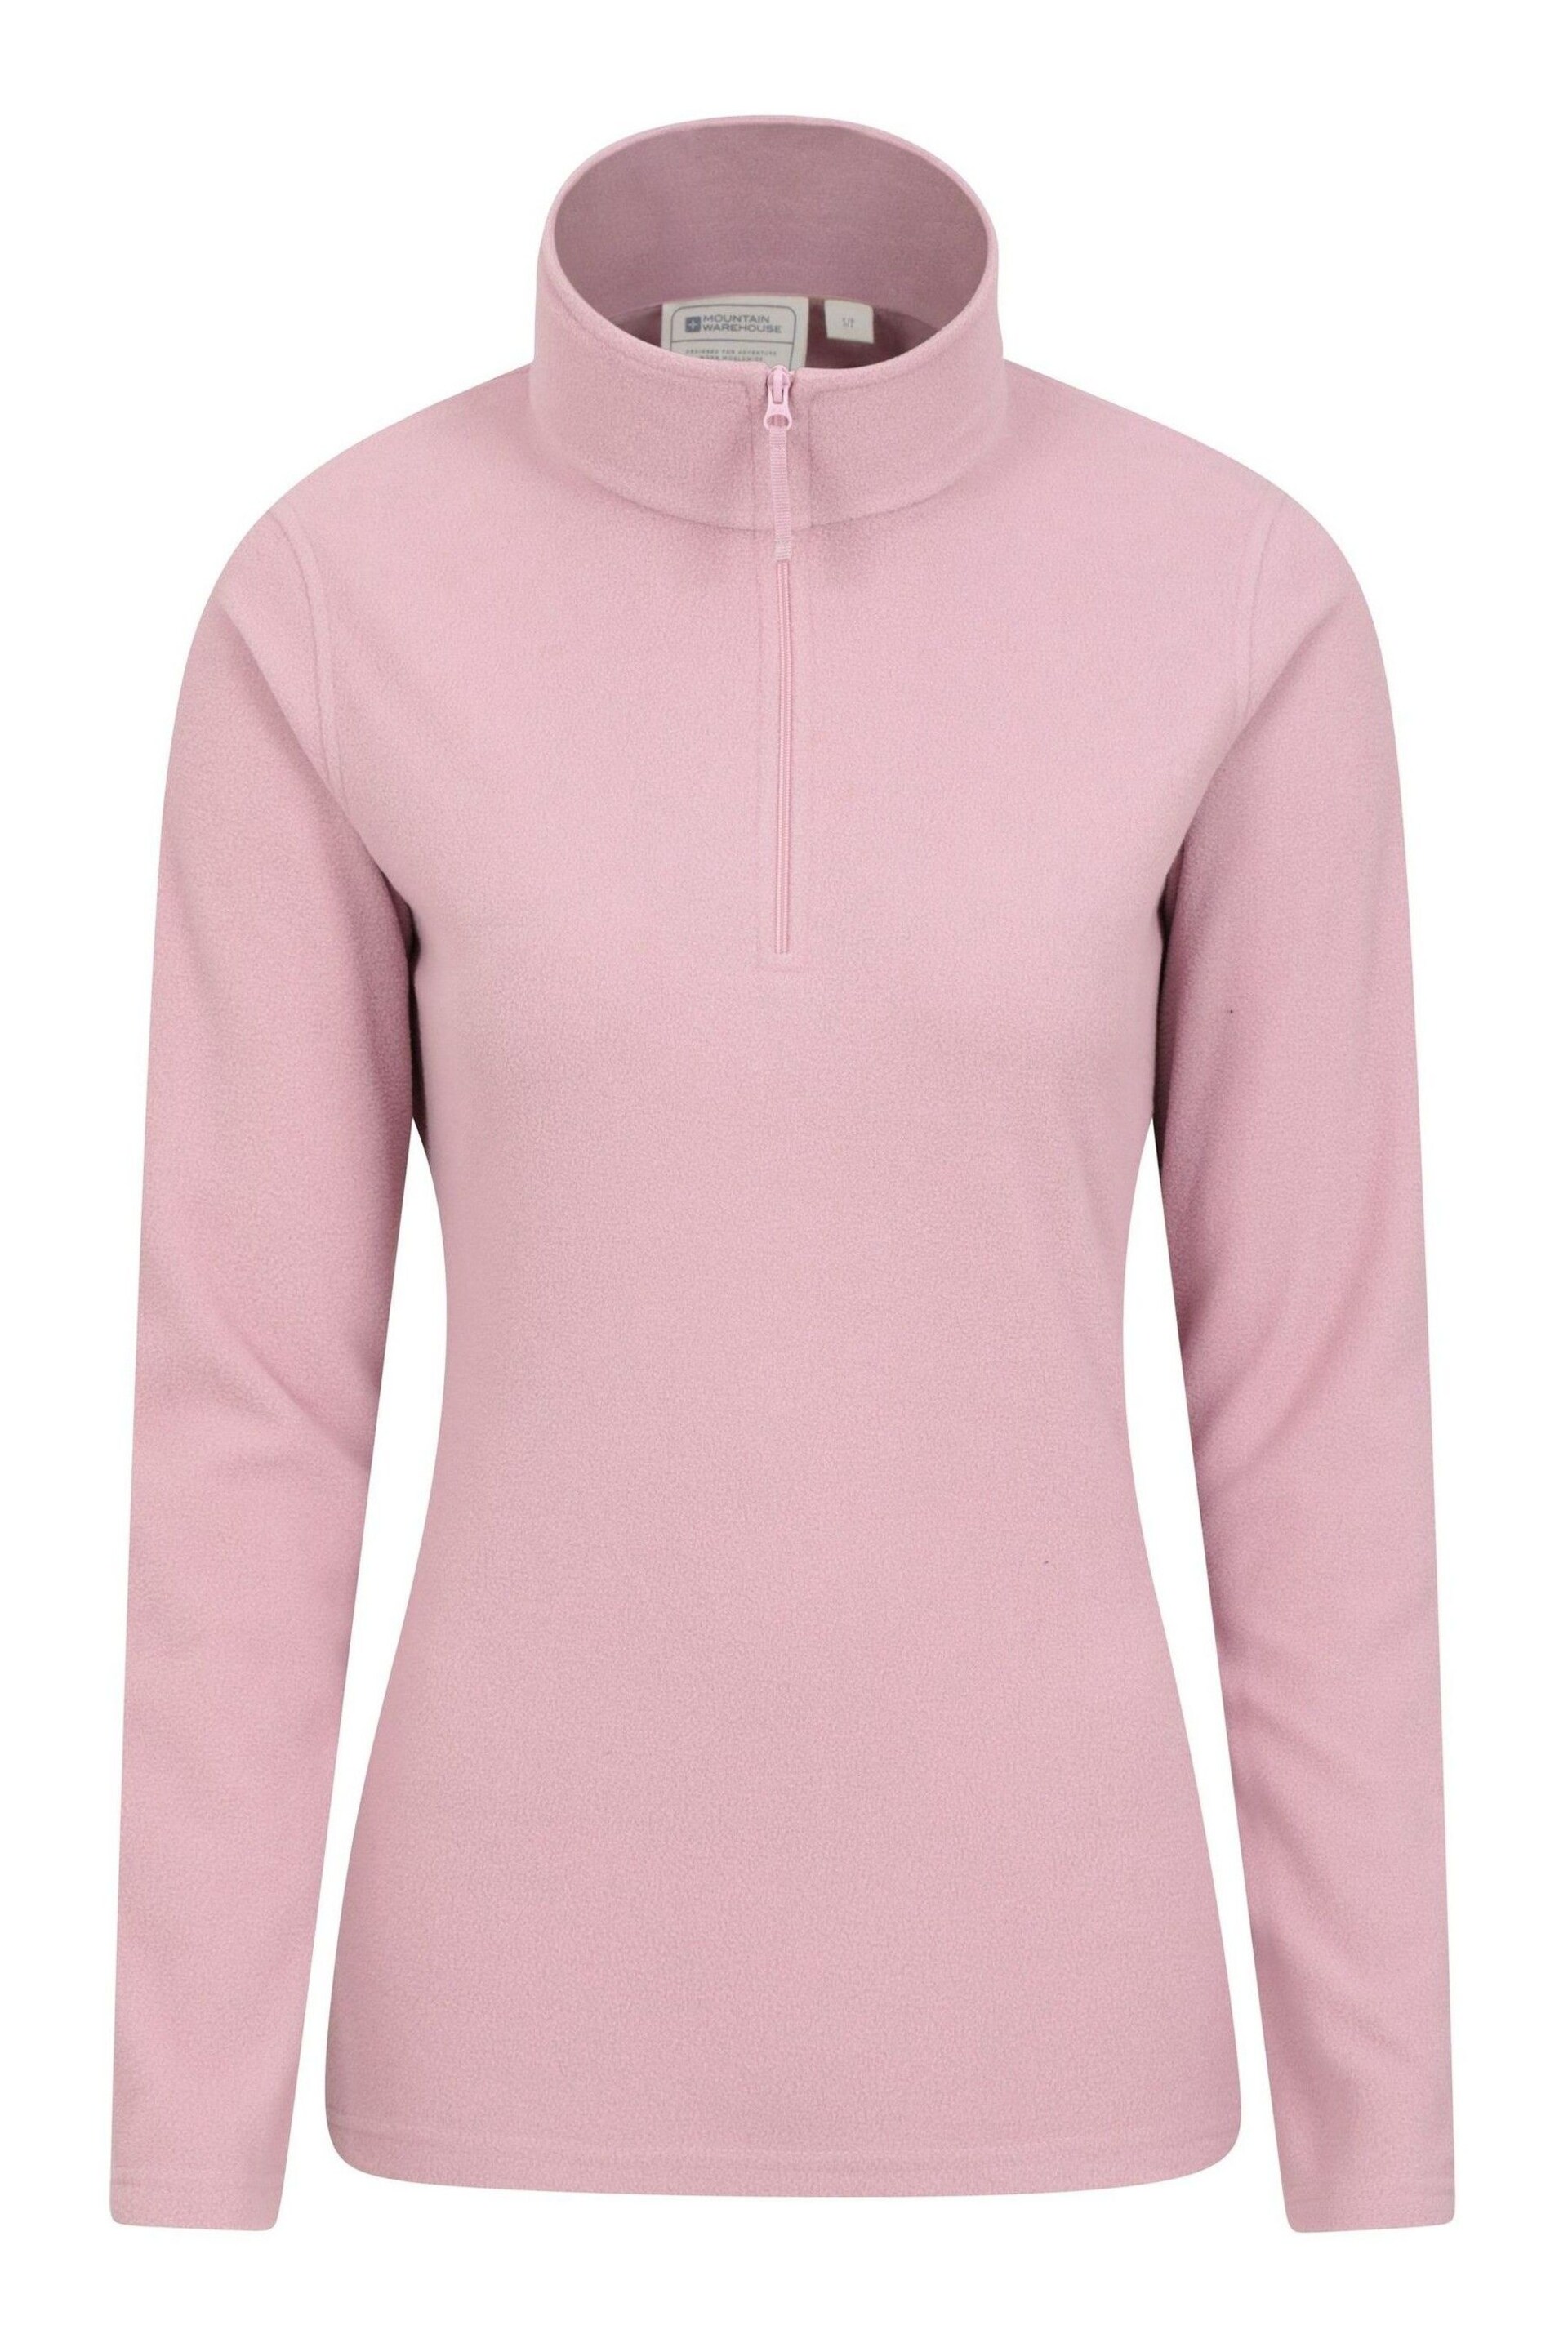 Mountain Warehouse Pink Camber Womens Half-Zip Fleece - Image 1 of 5